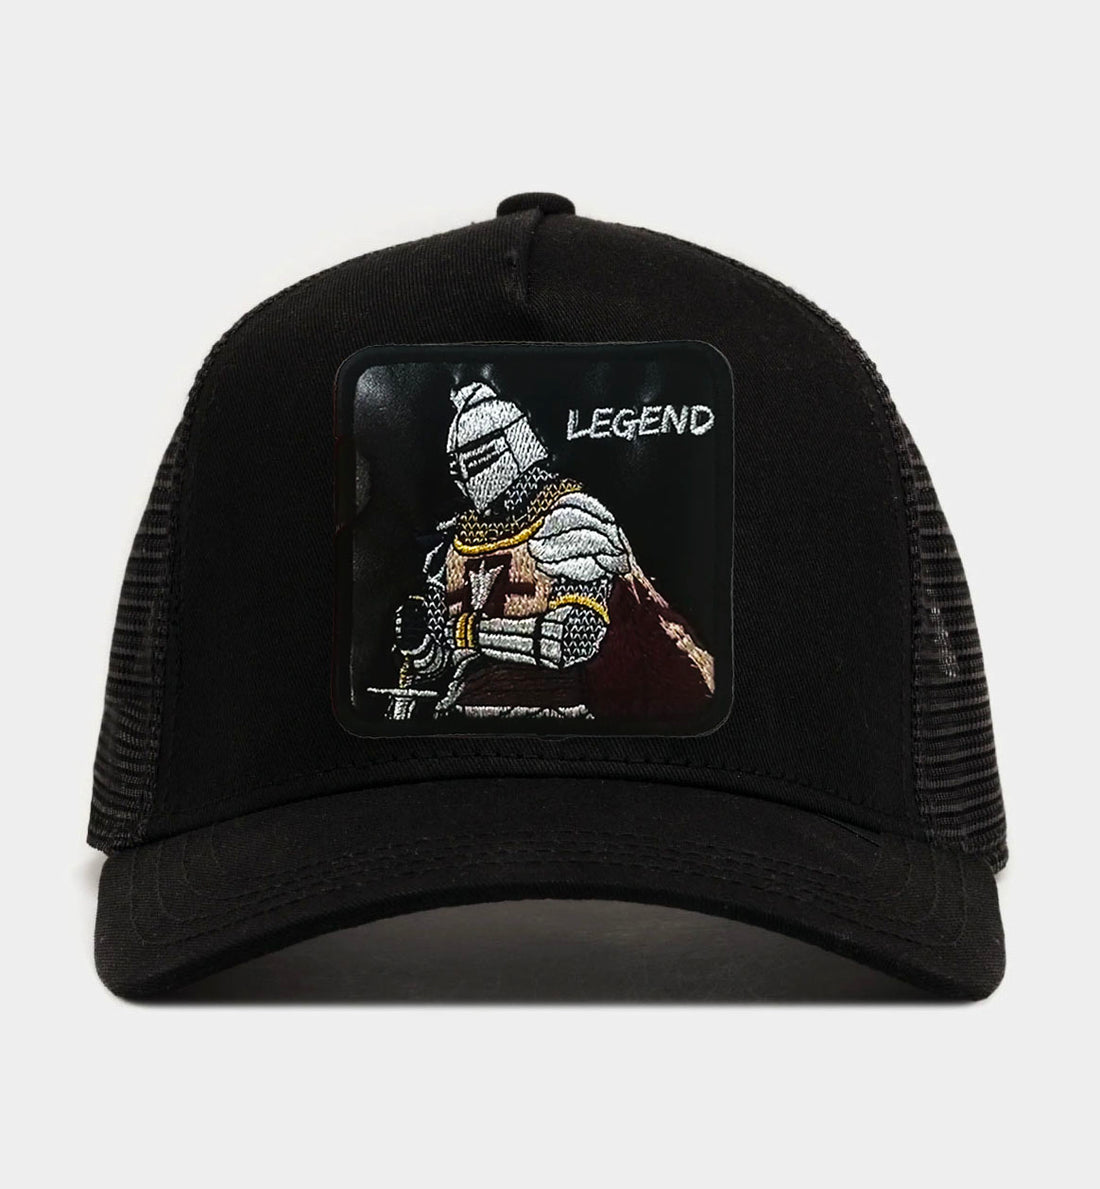 Medieval Knight - "Legend" Trucker Hat